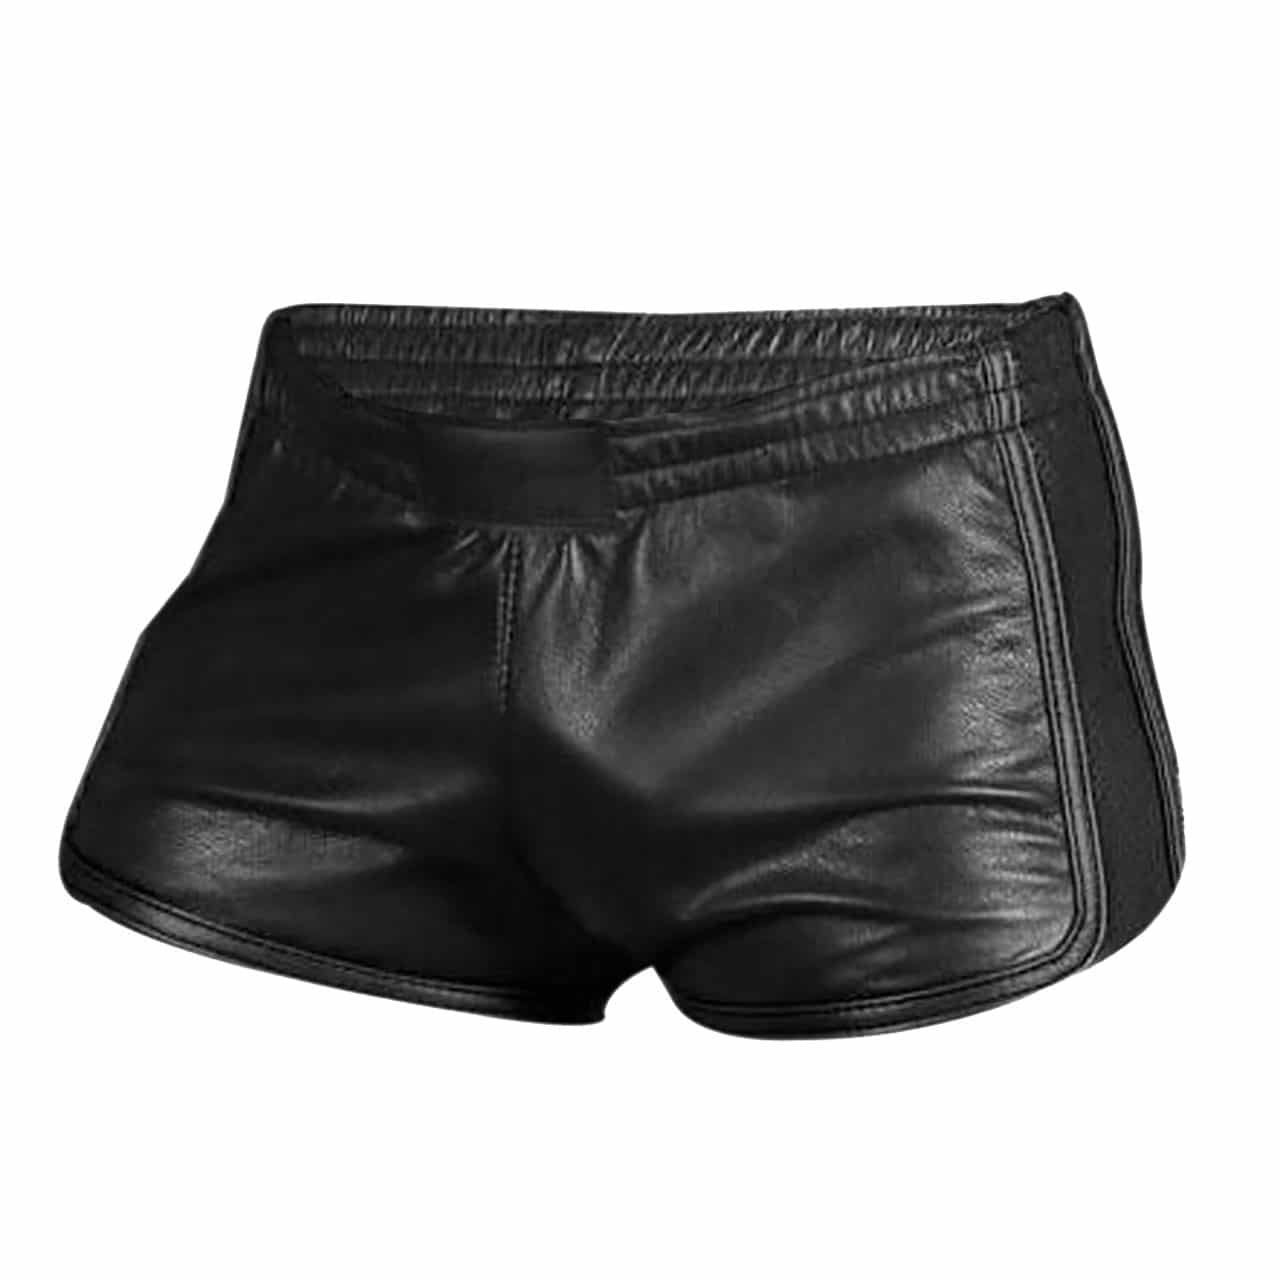 Mens Gym Boxer Sports Shorts Black Soft Sheep Lamb Leather - SHORTS6-BLK